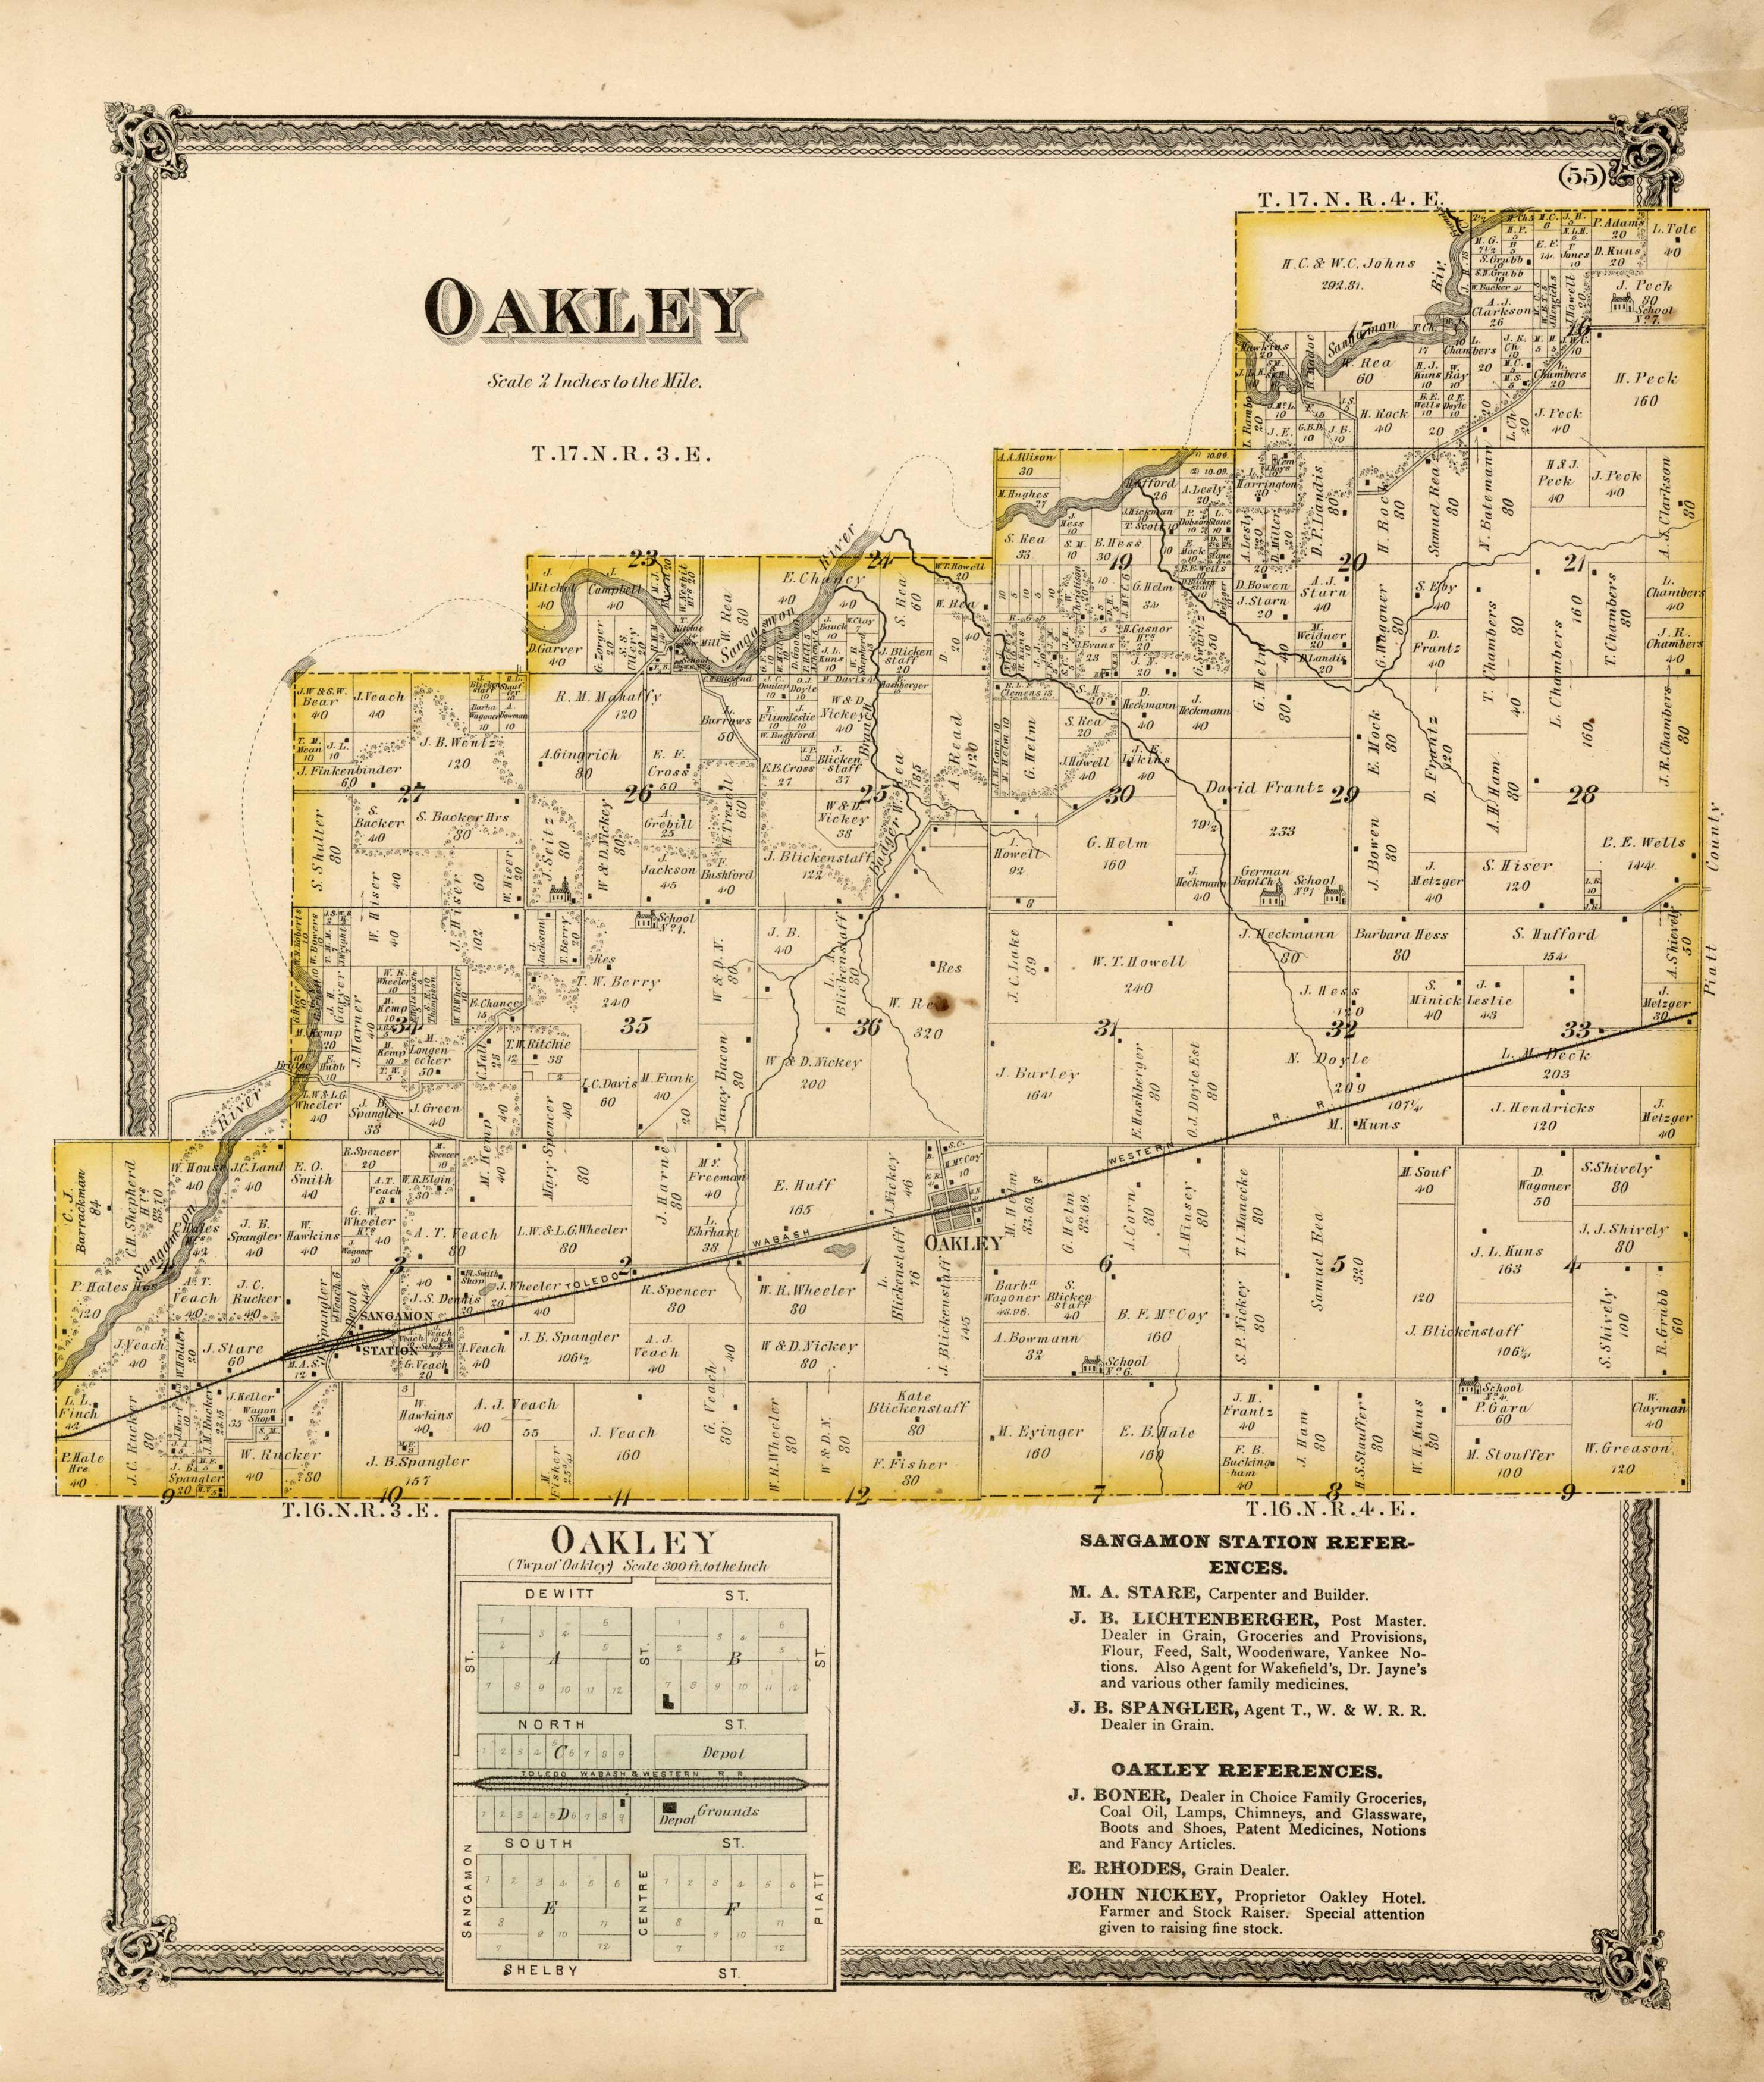 Oakley Township, Macon County, Illinois - Art Source International